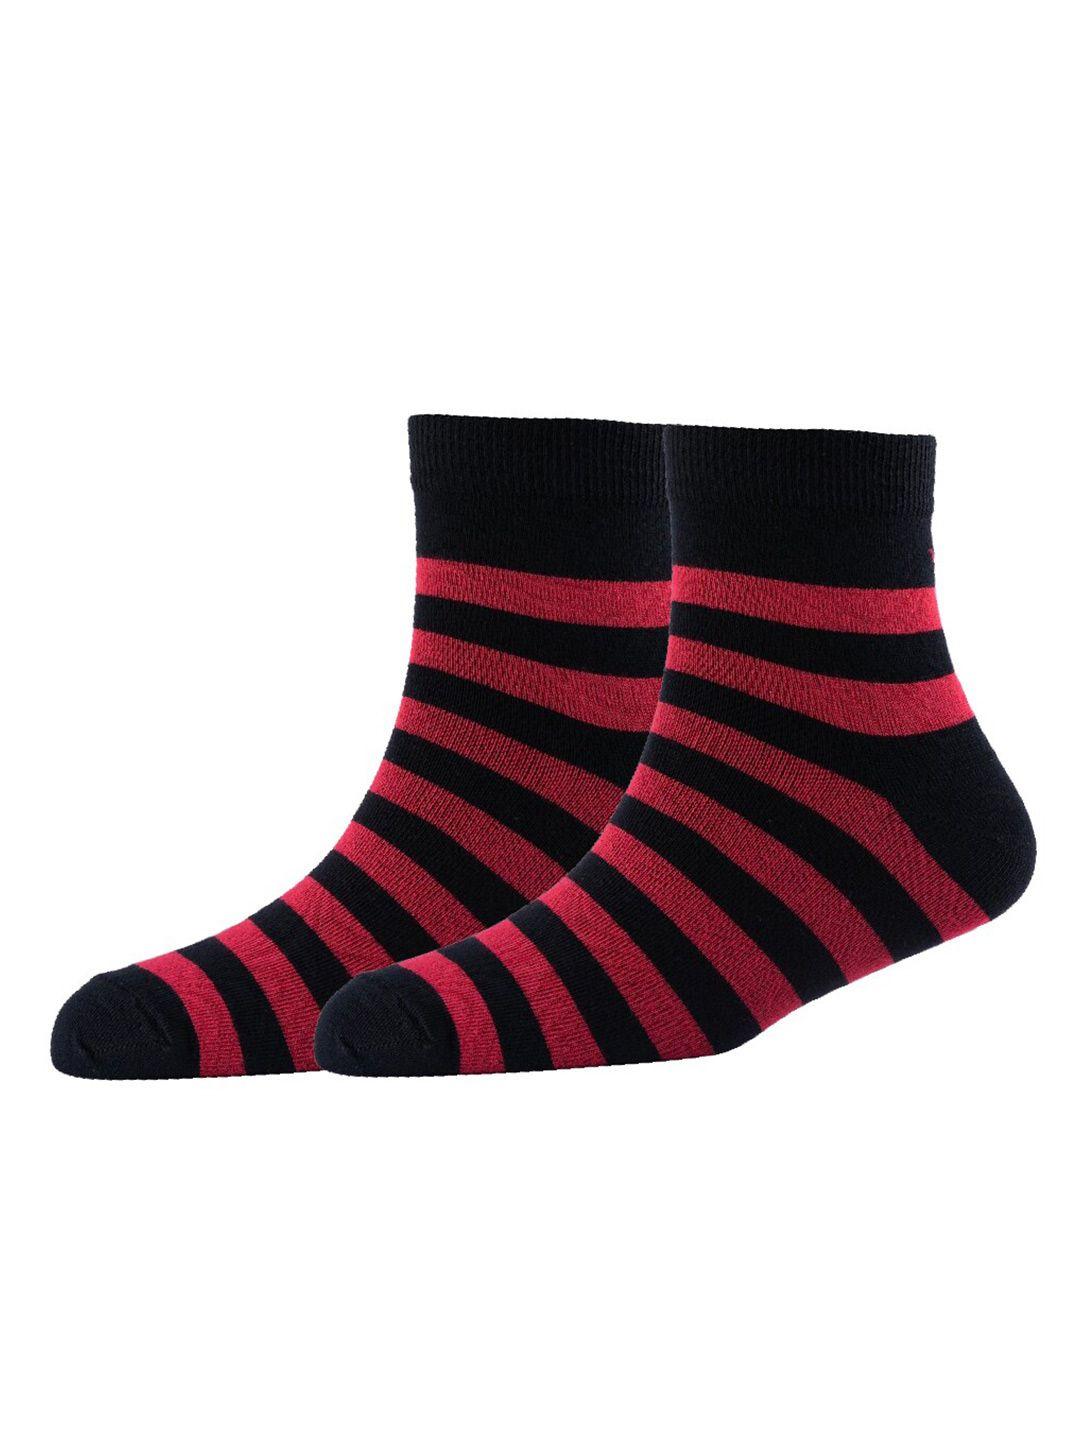 cotstyle men patterned cotton ankle length socks